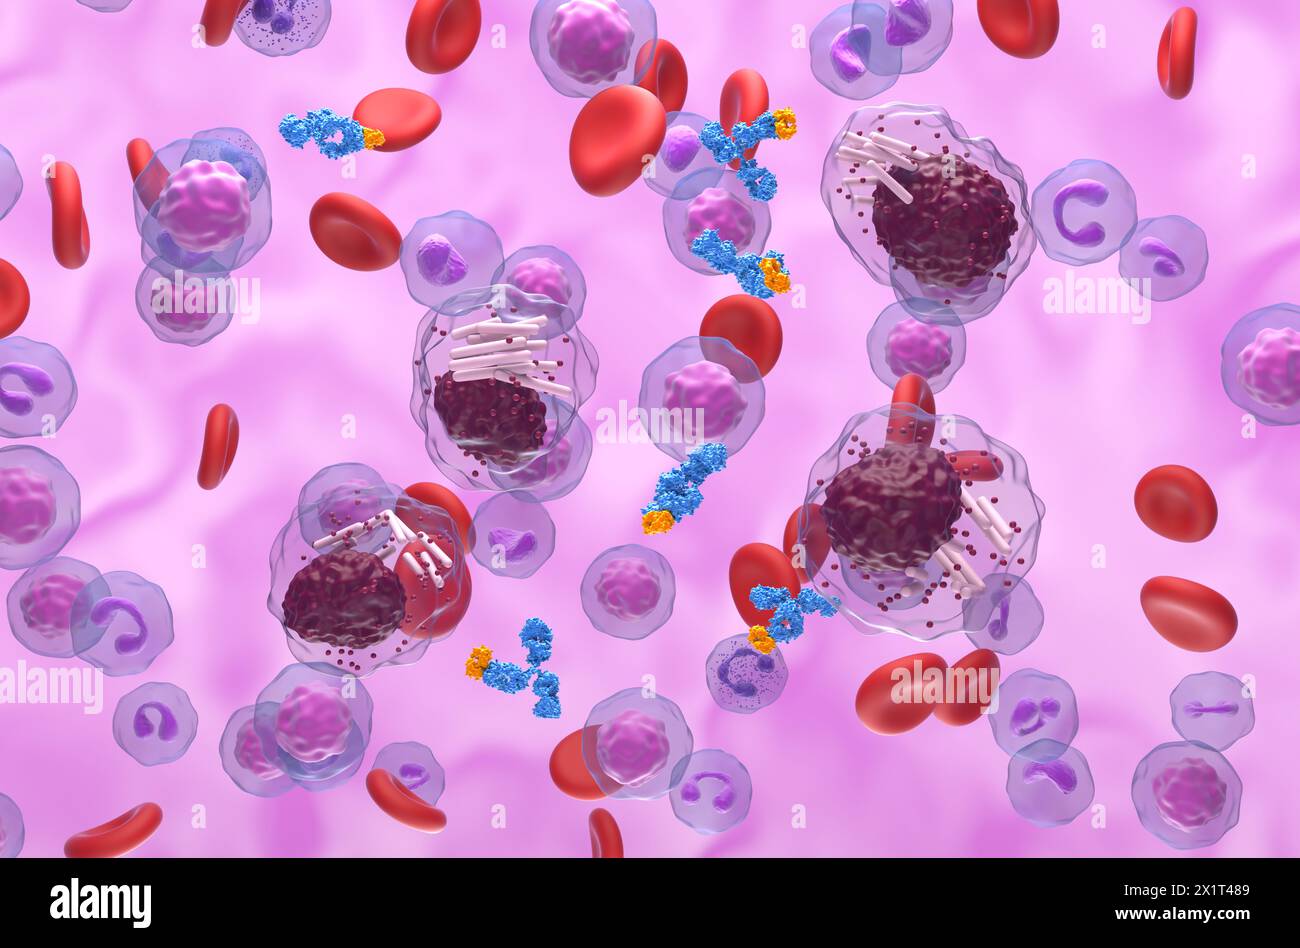 Monoclonal antibody treatment in Chronic lymphocytic leukemia (CLL) - isometric view 3d illustration Stock Photo